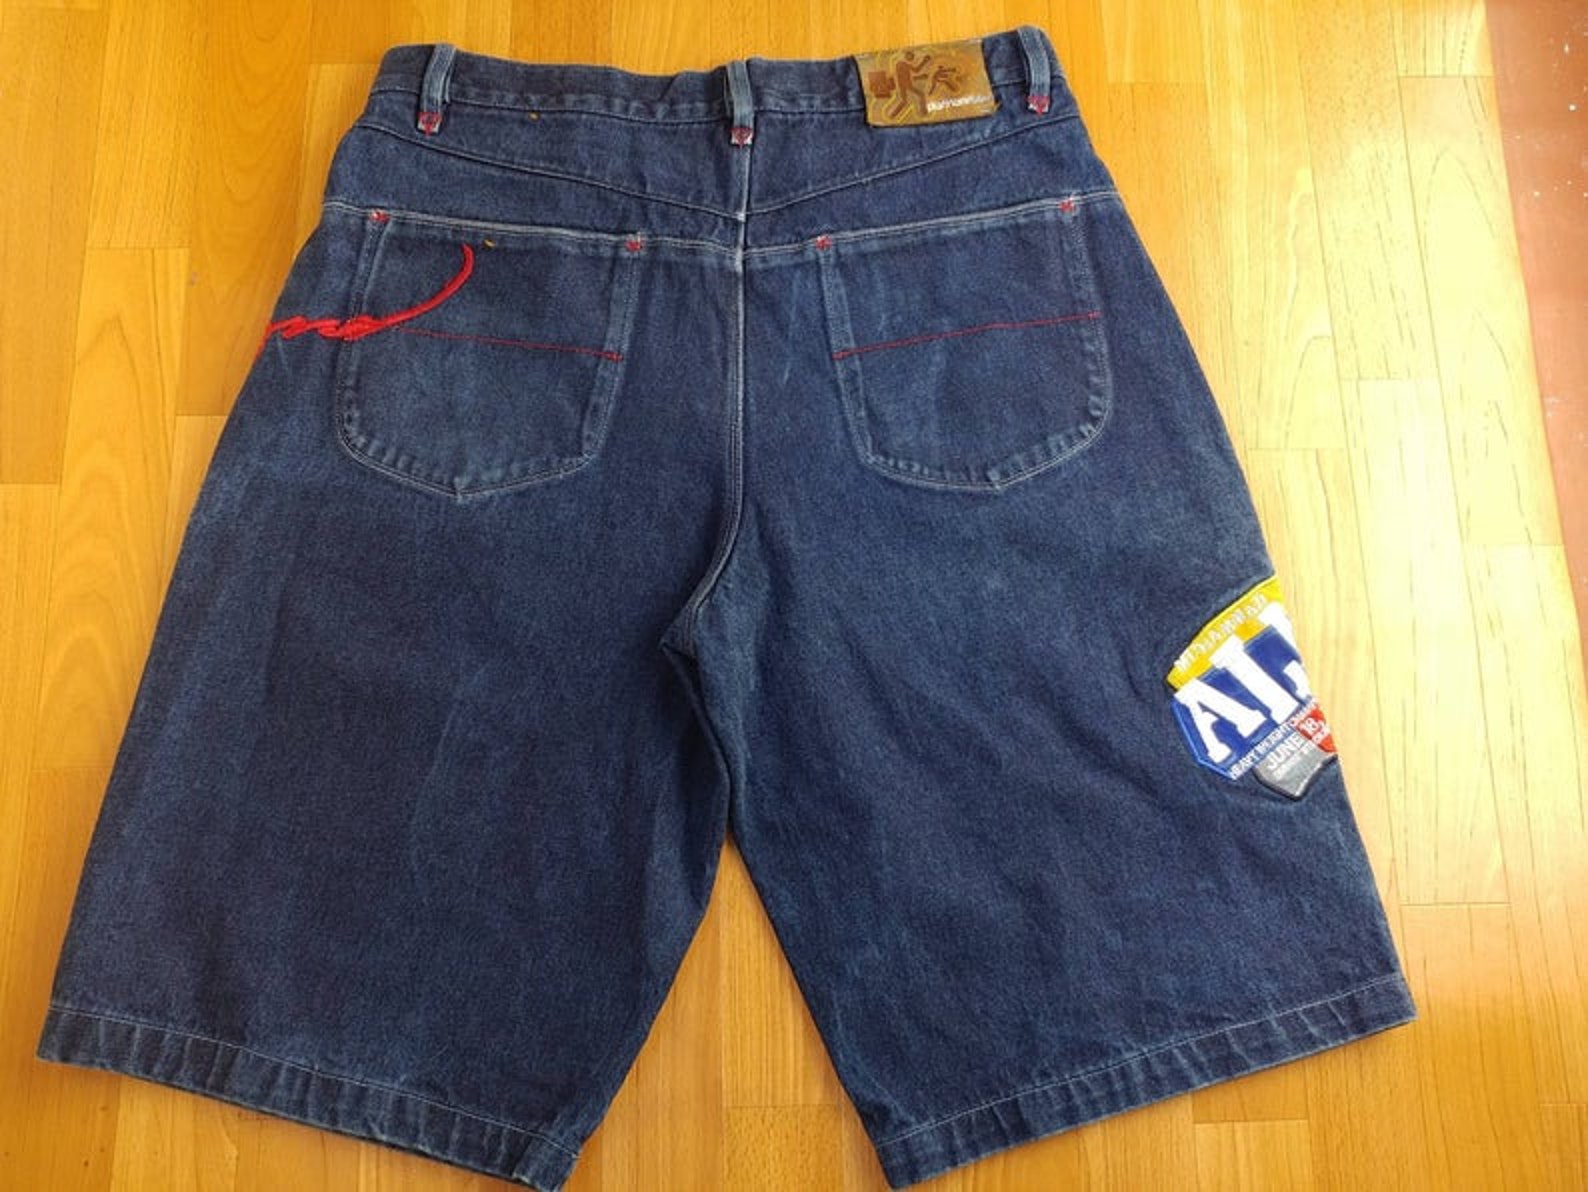 Platinum FUBU jeans shorts old school vintage baggy denim | Etsy